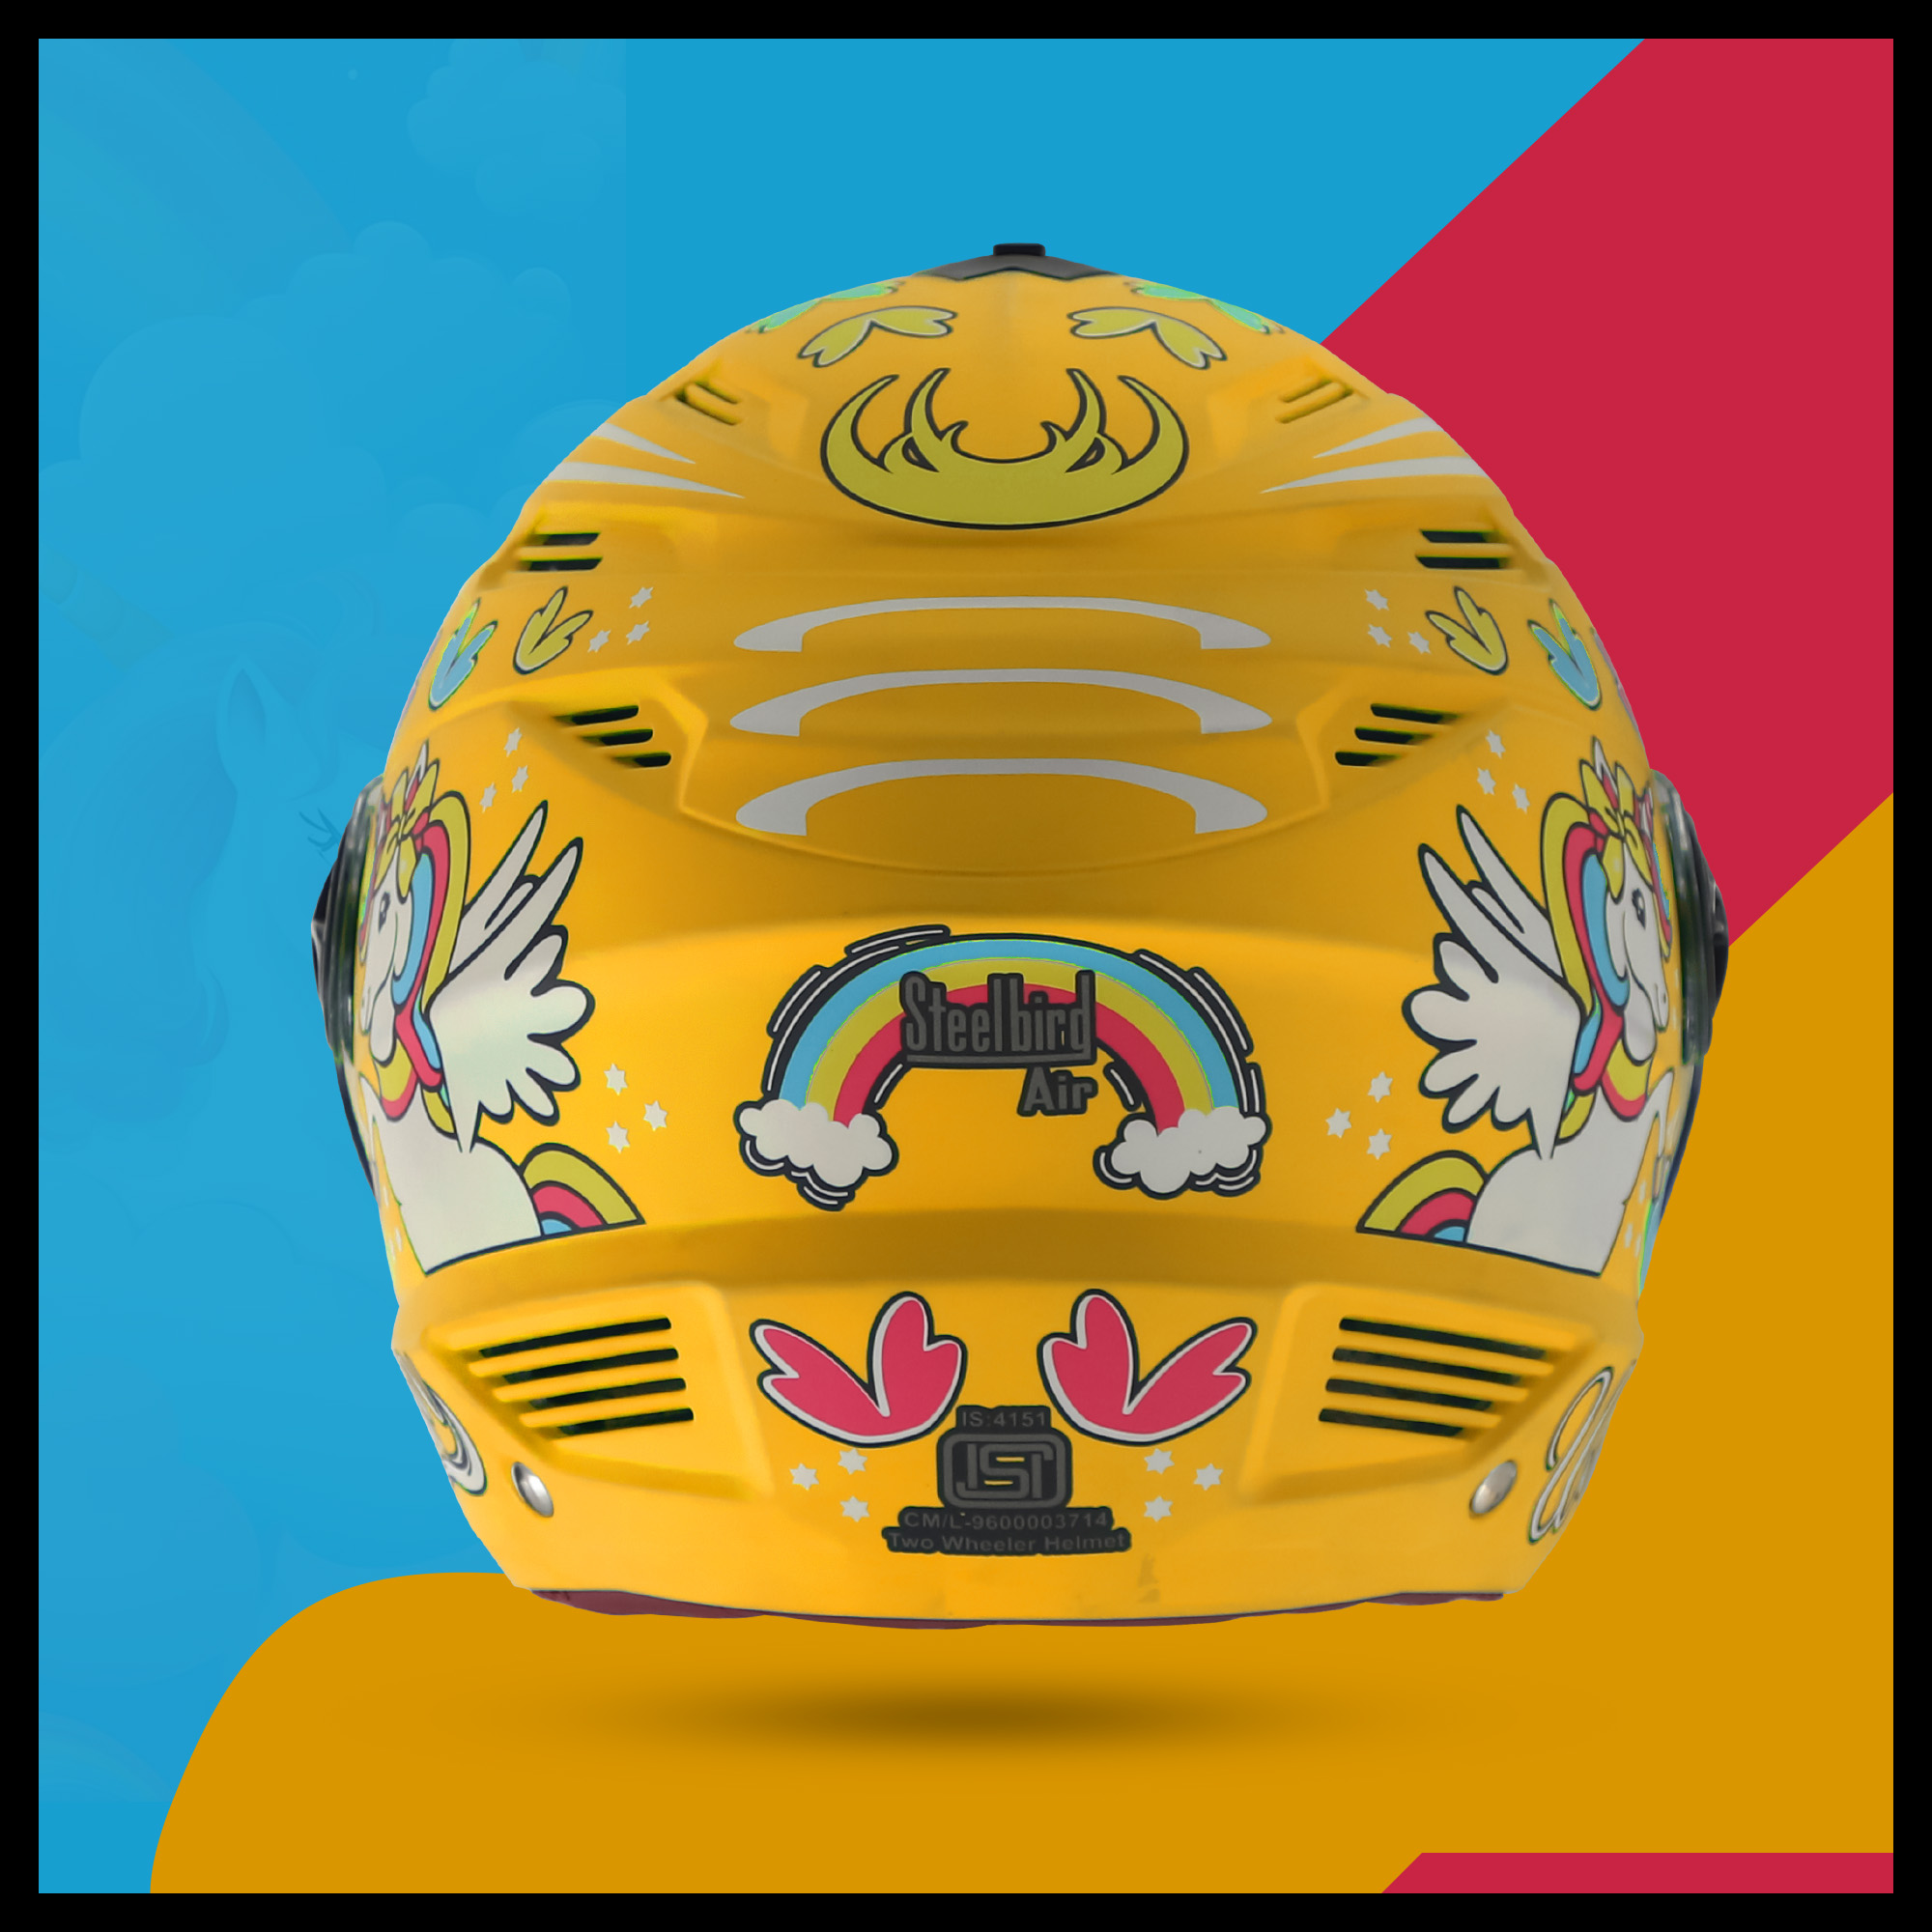 Steelbird SBA-6 Unicorn ISI Certified Open Face Helmet For Men And Women (Matt Yellow With Clear Visor)